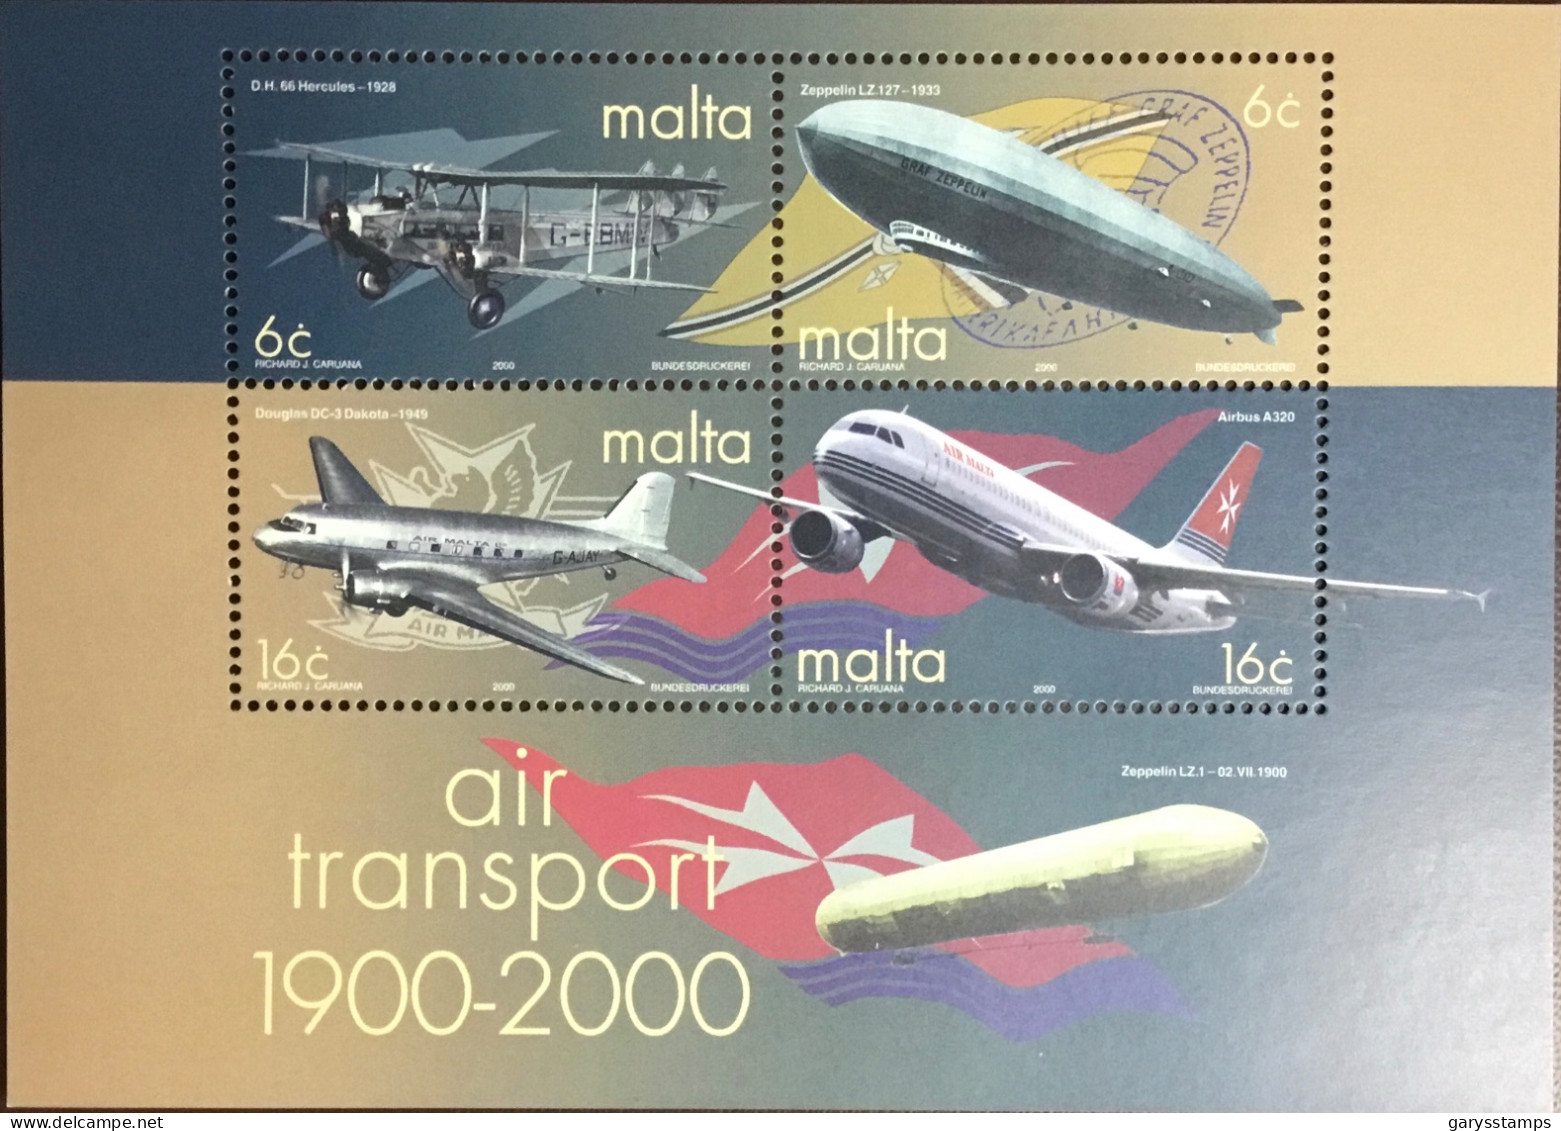 Malta 2000 Air Transport Aircraft Minisheet MNH - Malte